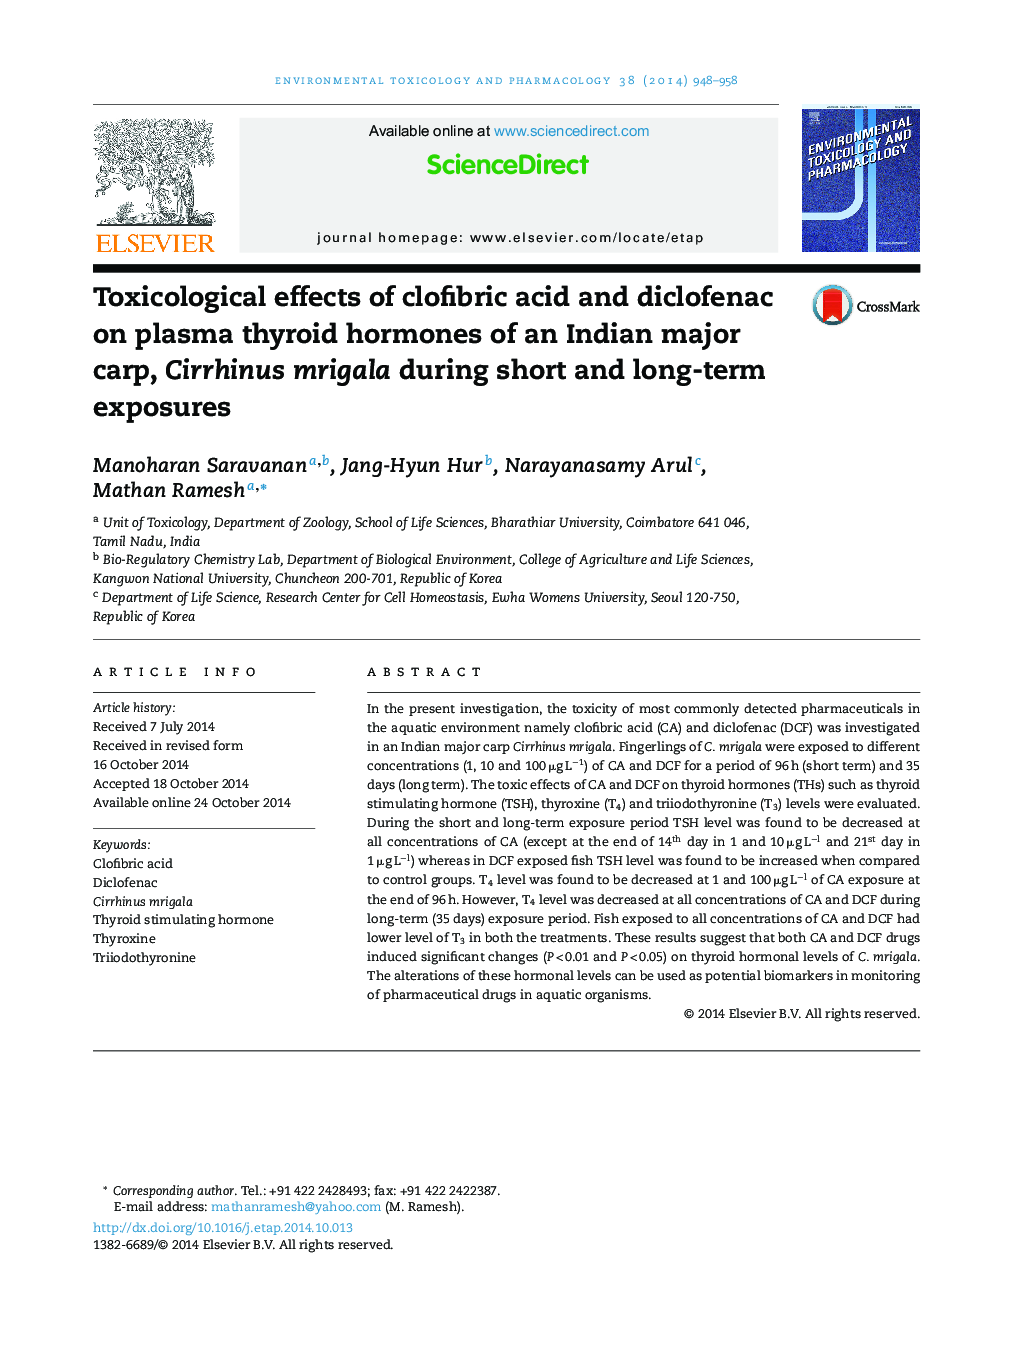 Toxicological effects of clofibric acid and diclofenac on plasma thyroid hormones of an Indian major carp, Cirrhinus mrigala during short and long-term exposures